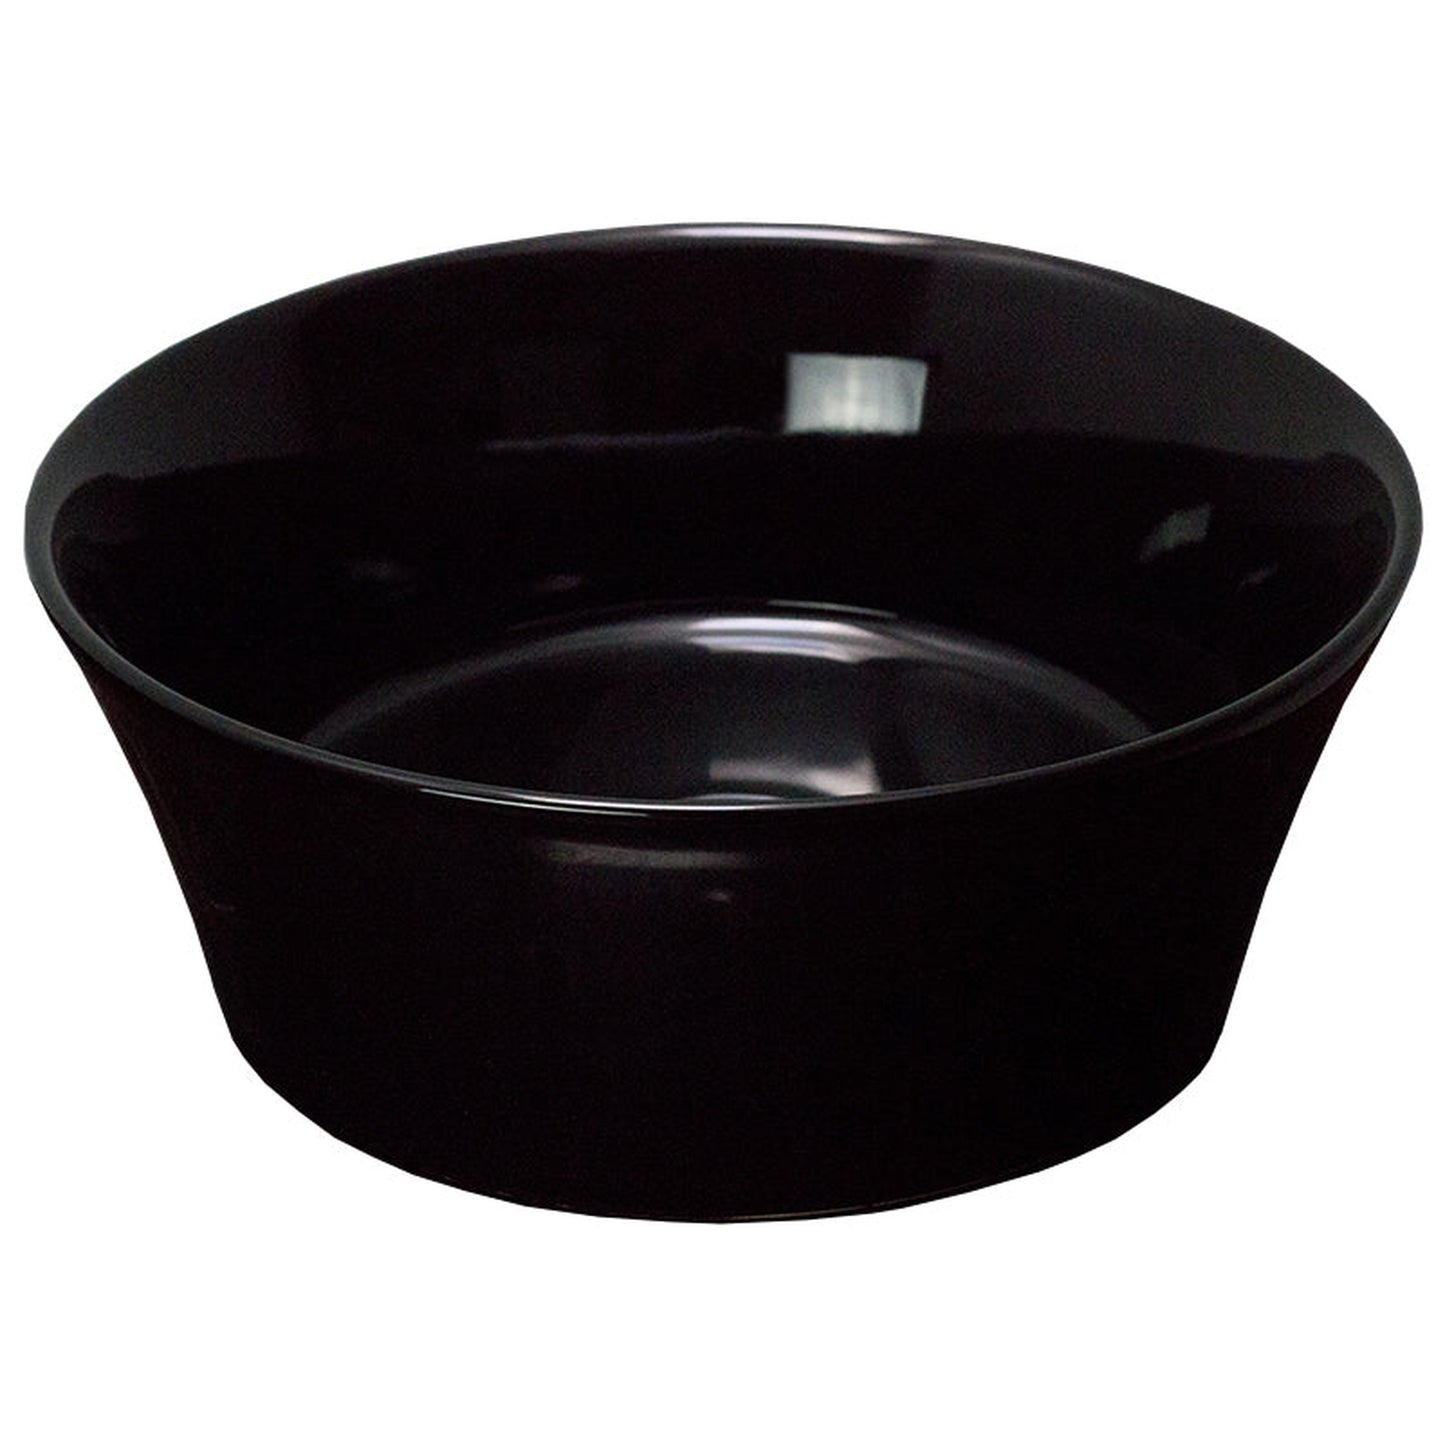 American Imaginations AI-27896 Round Black Ceramic Bathroom Vessel Sink with Enamel Glaze Finish